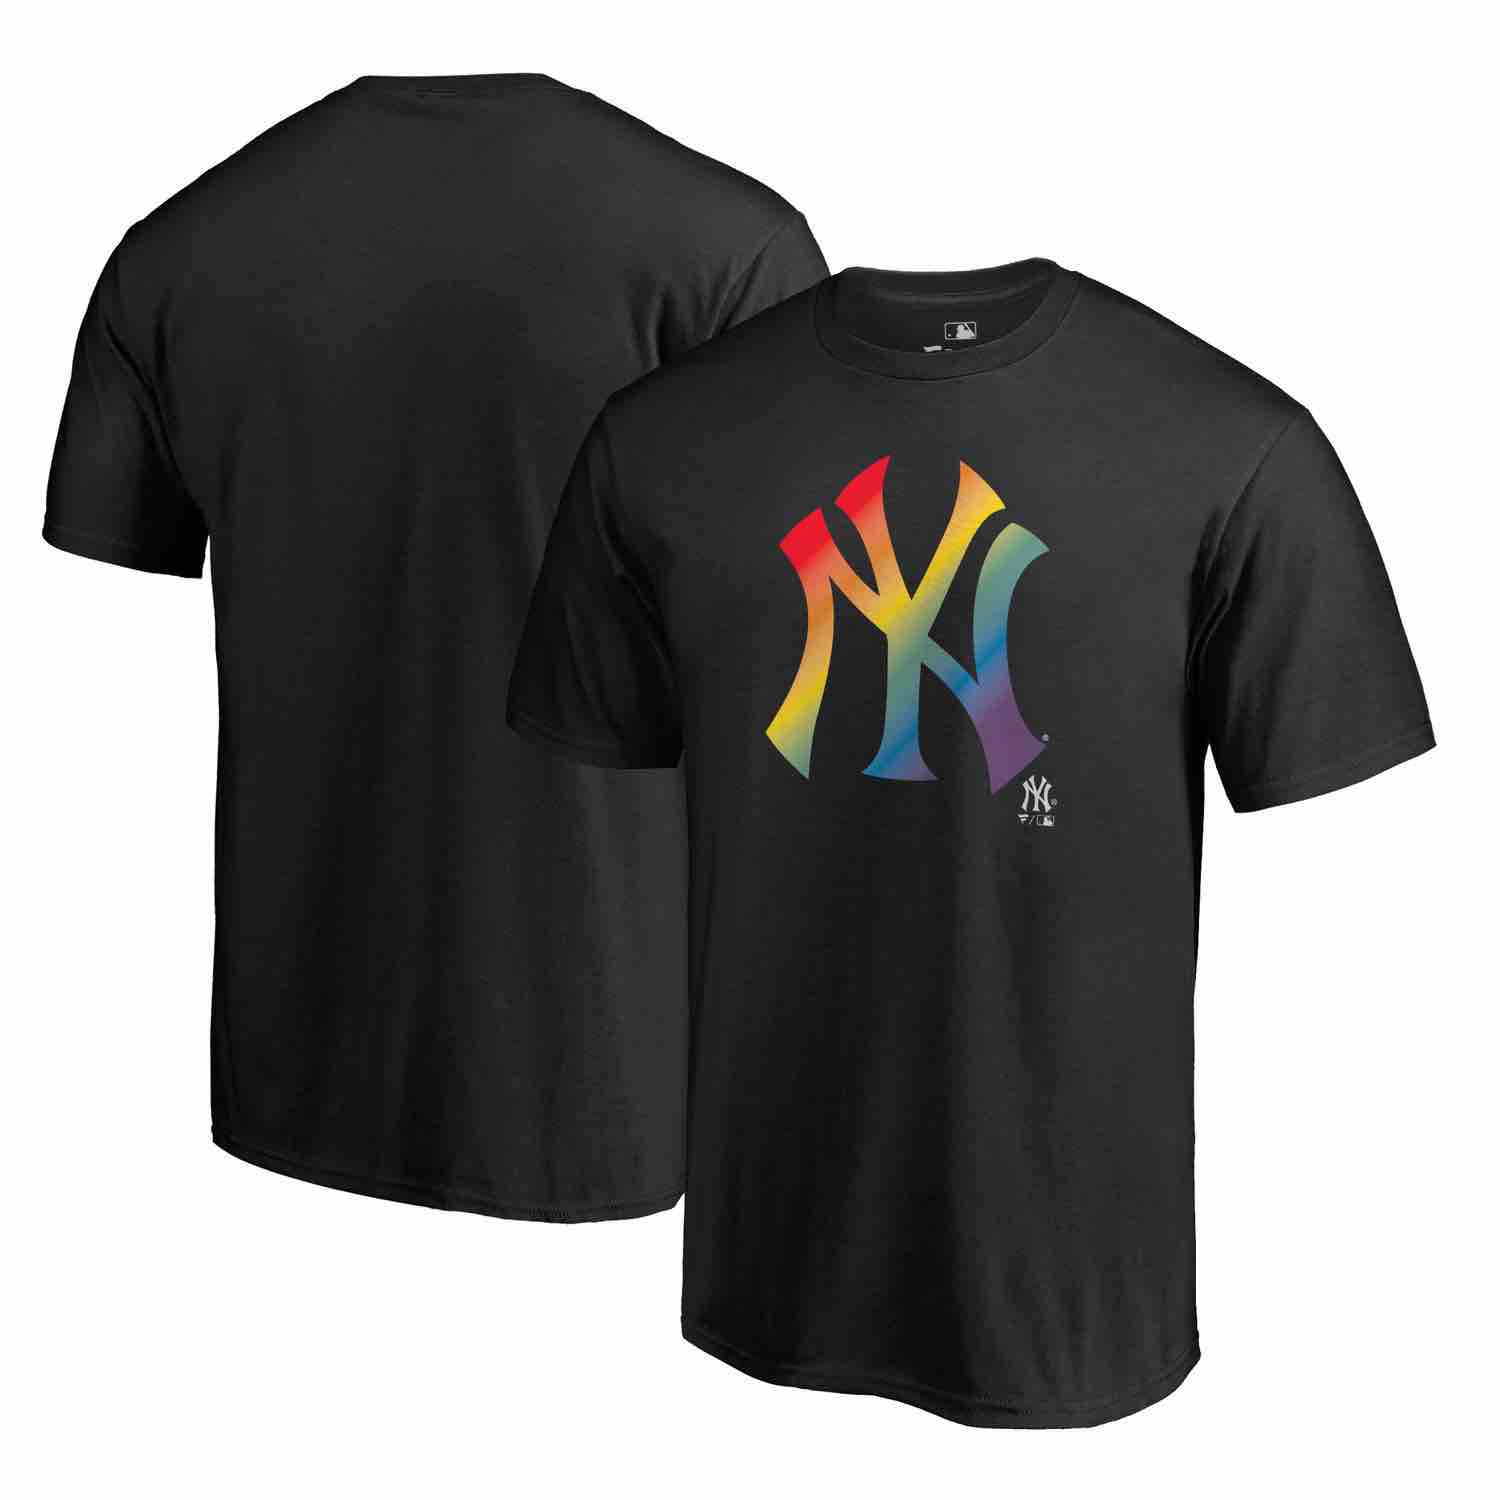 Mens New York Yankees Fanatics Branded Pride Black T-Shirt